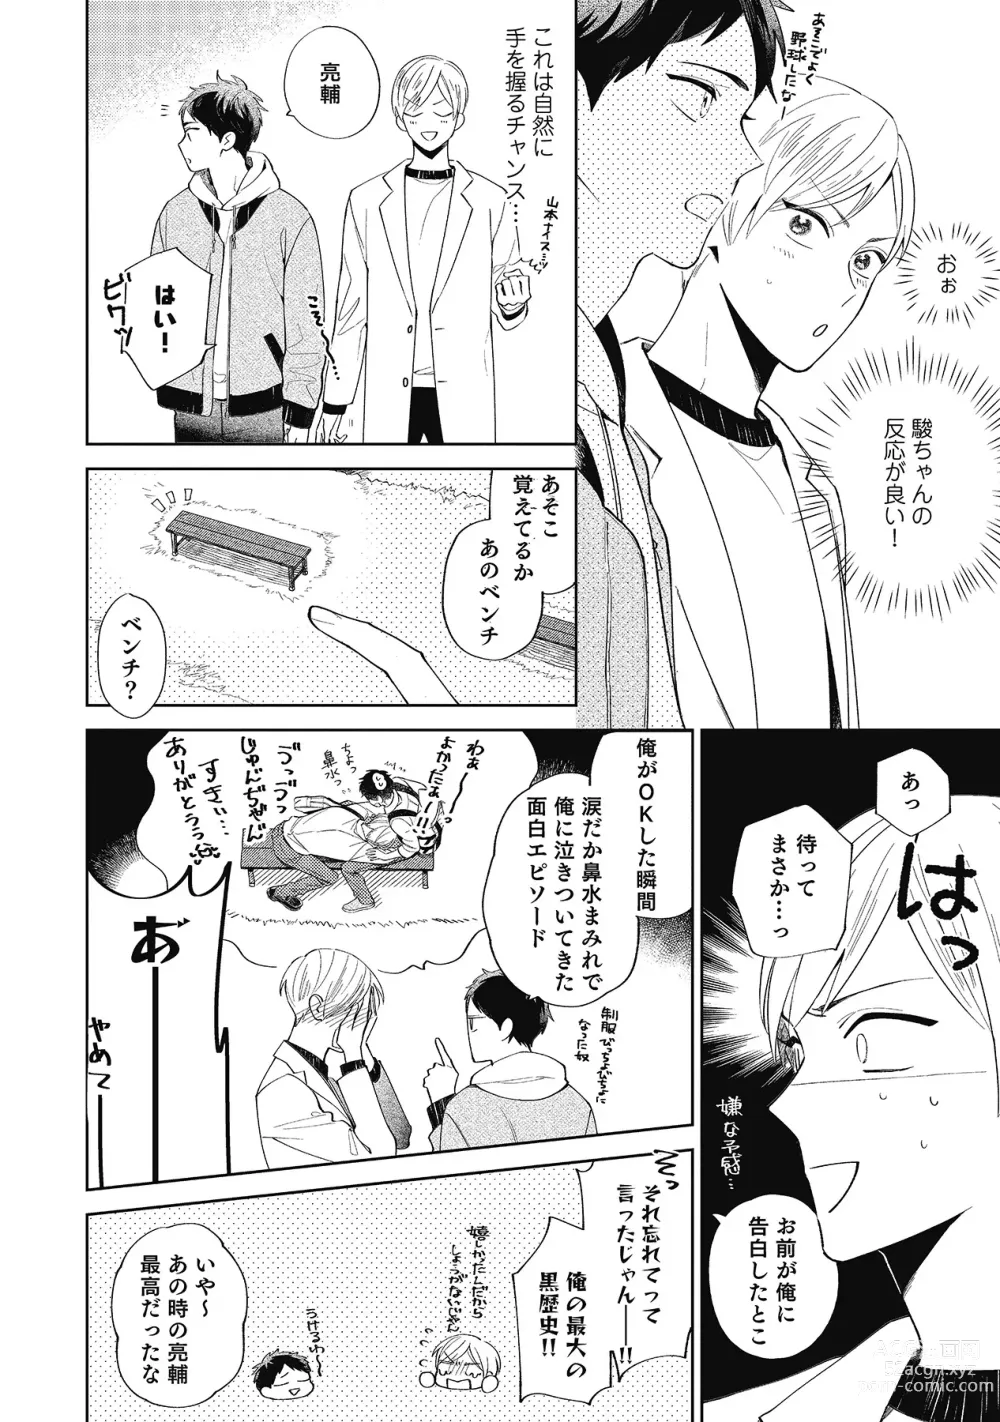 Page 24 of manga Sentimental Darling